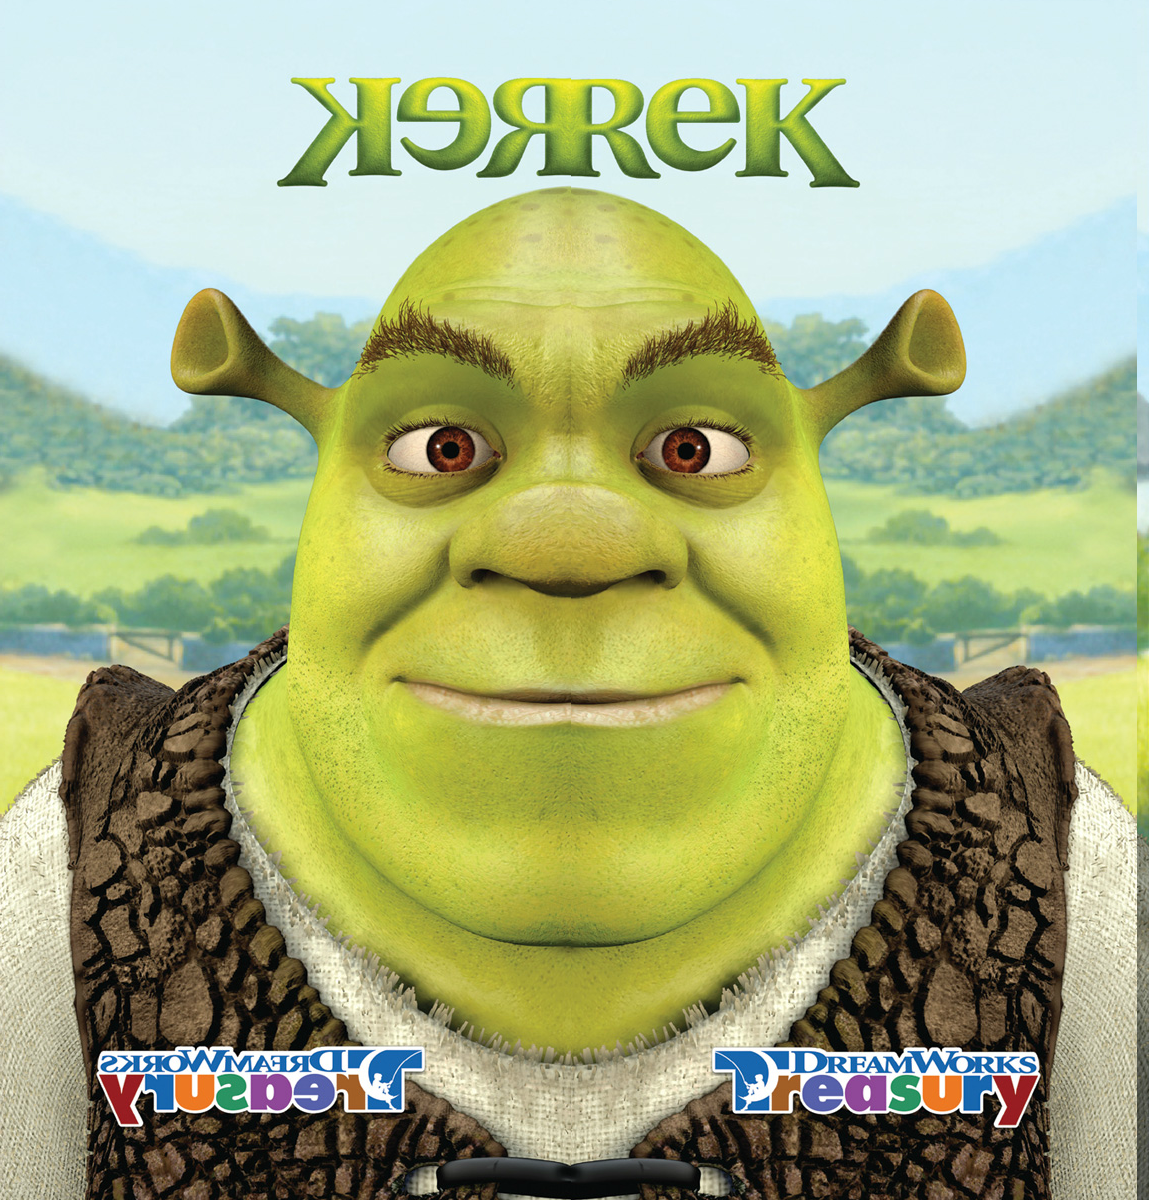 Shrek Images on Fanpop.